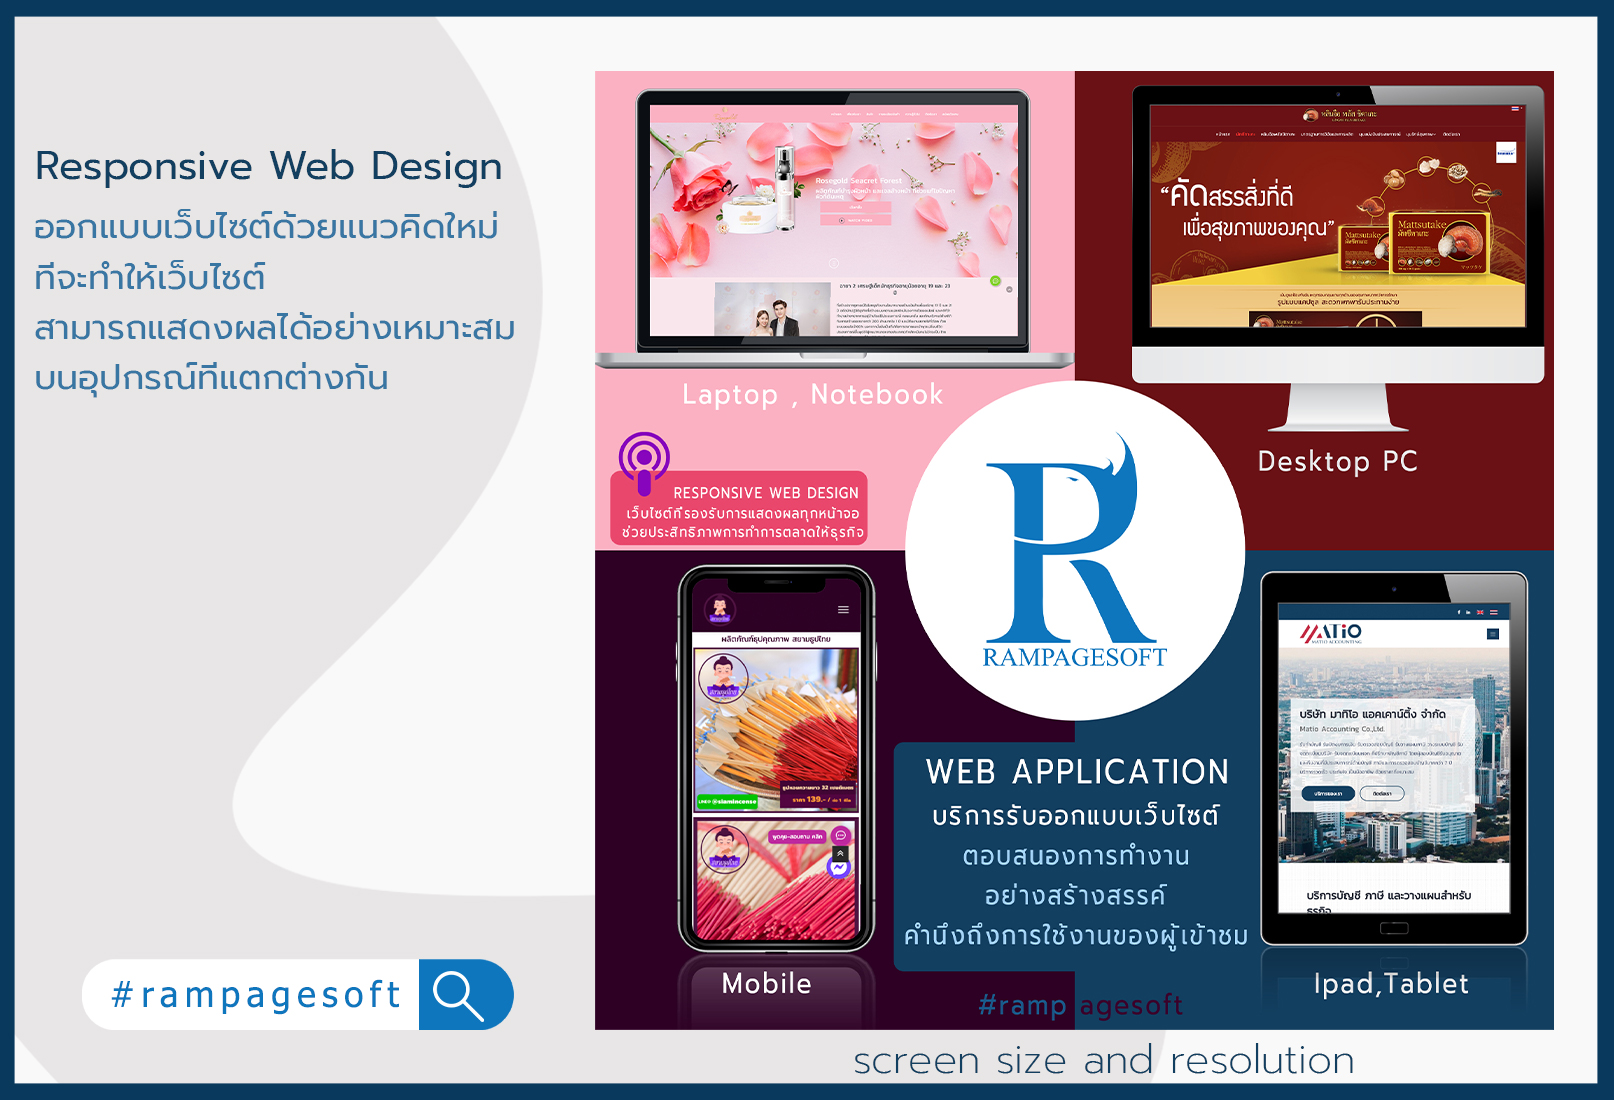 Responsive Web Design บทความ ข่าวสาร rampagesoft